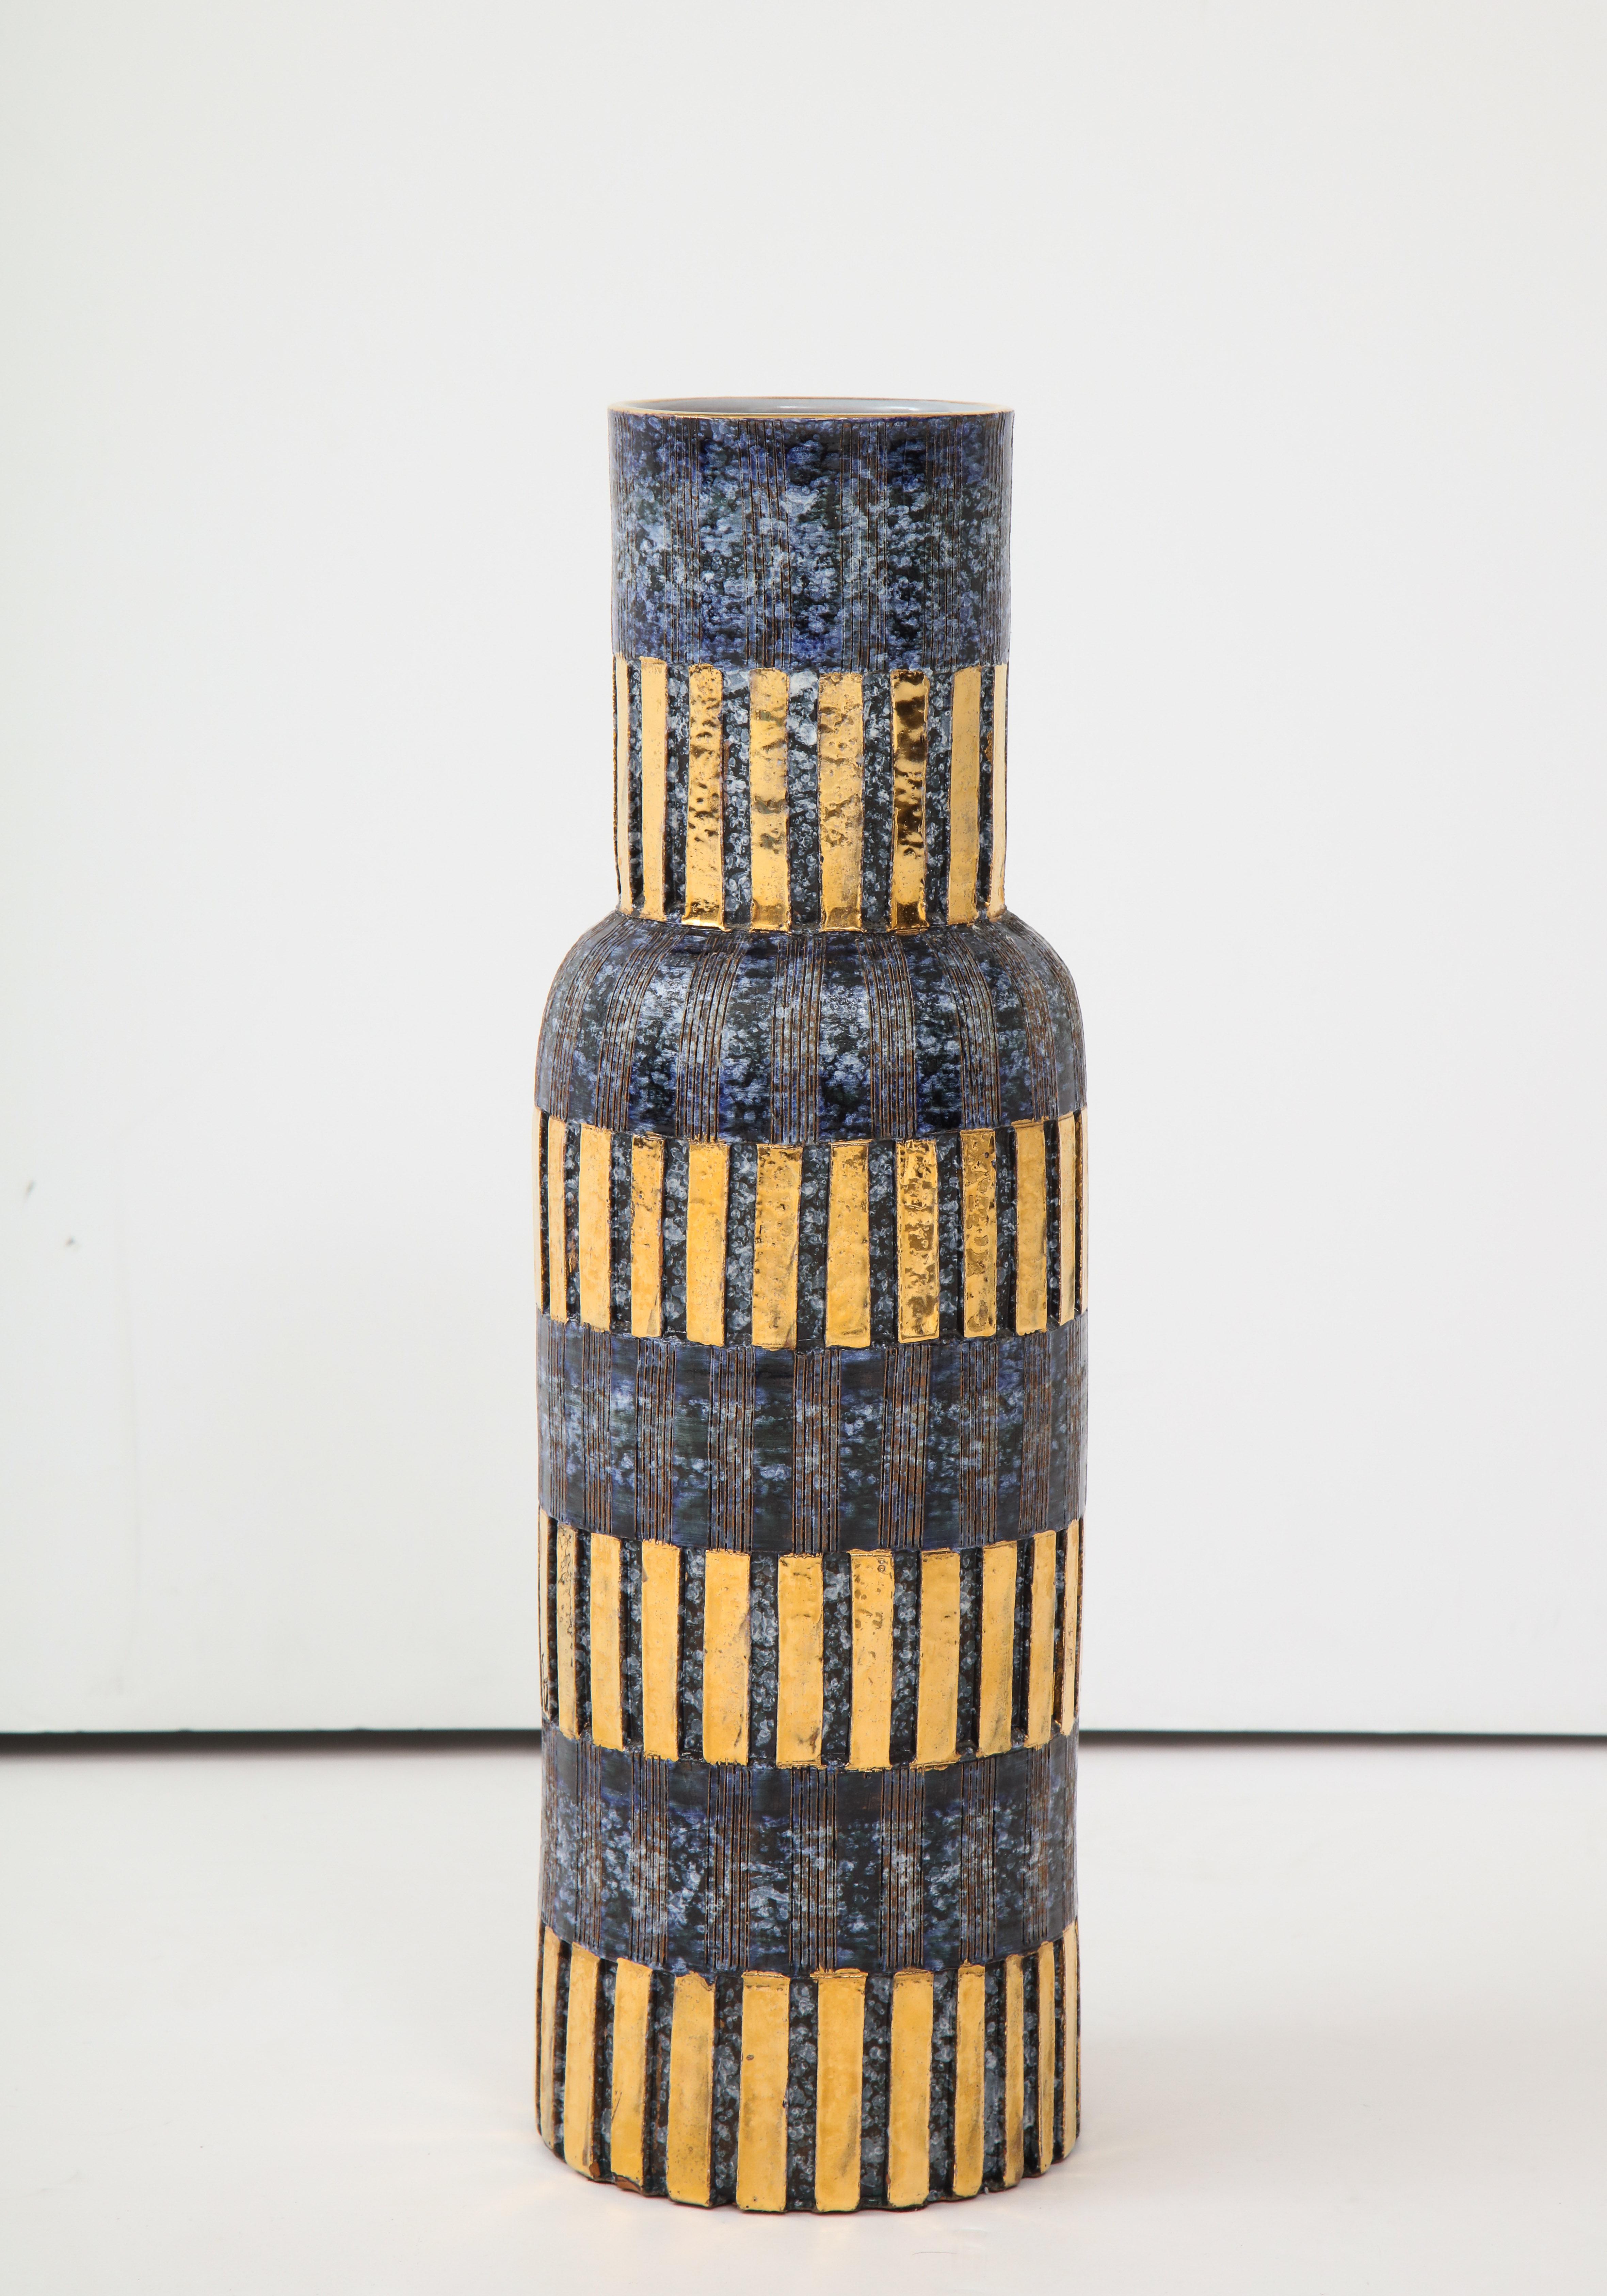 Midcentury classic bouquet vase in mottled blue glaze and 24-karat gold bands.
Stamped on bottom.